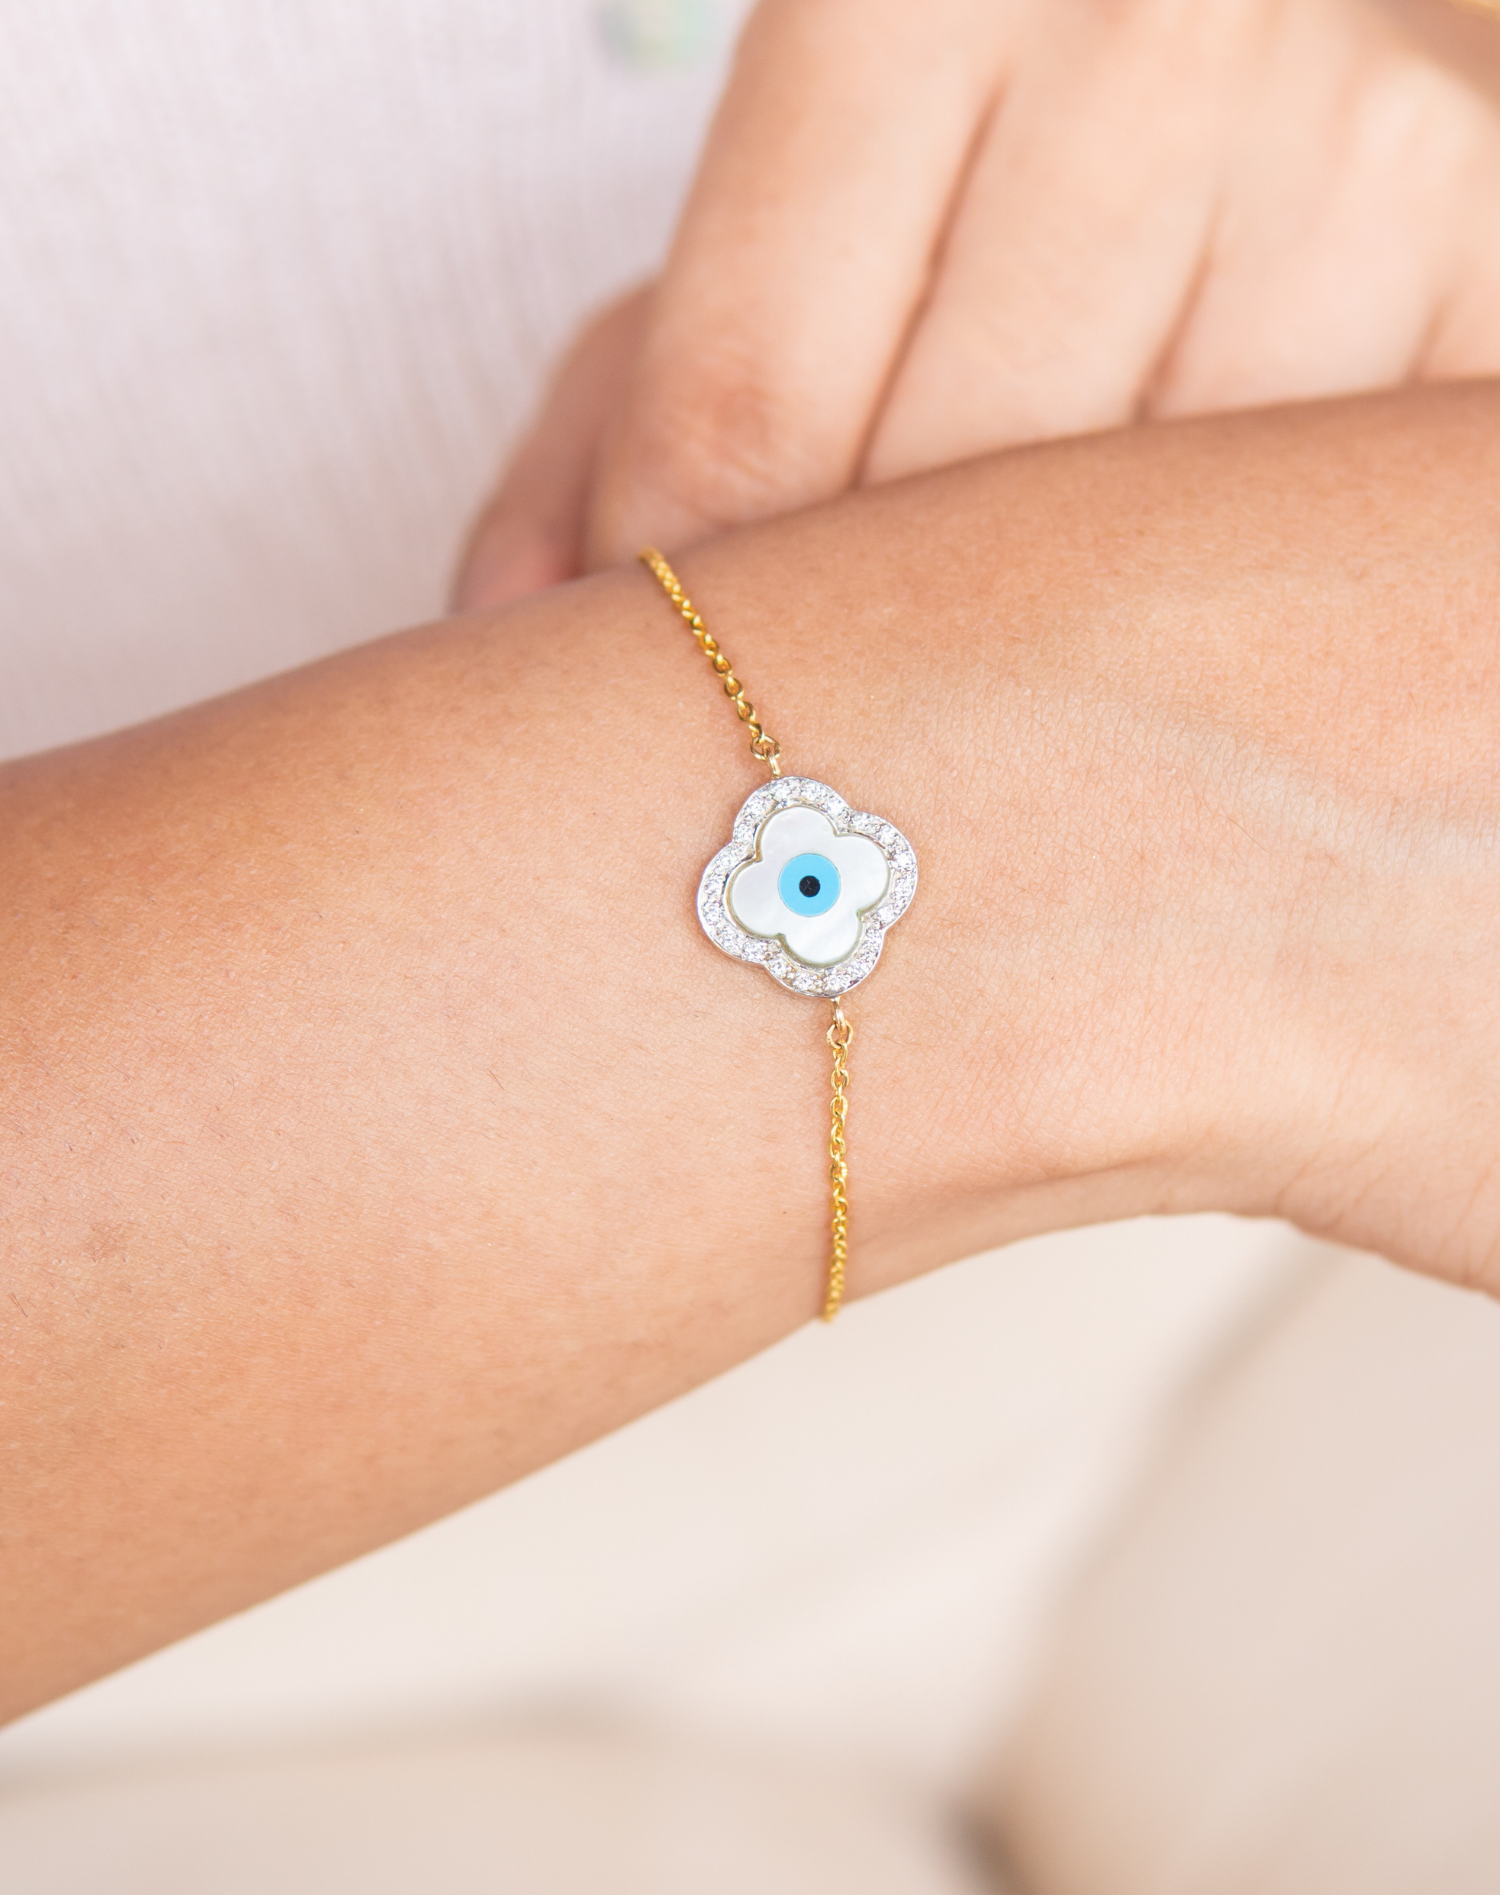 Shop Silver Diamond Bracelet for Women Online from India's Luxury Designers  2024